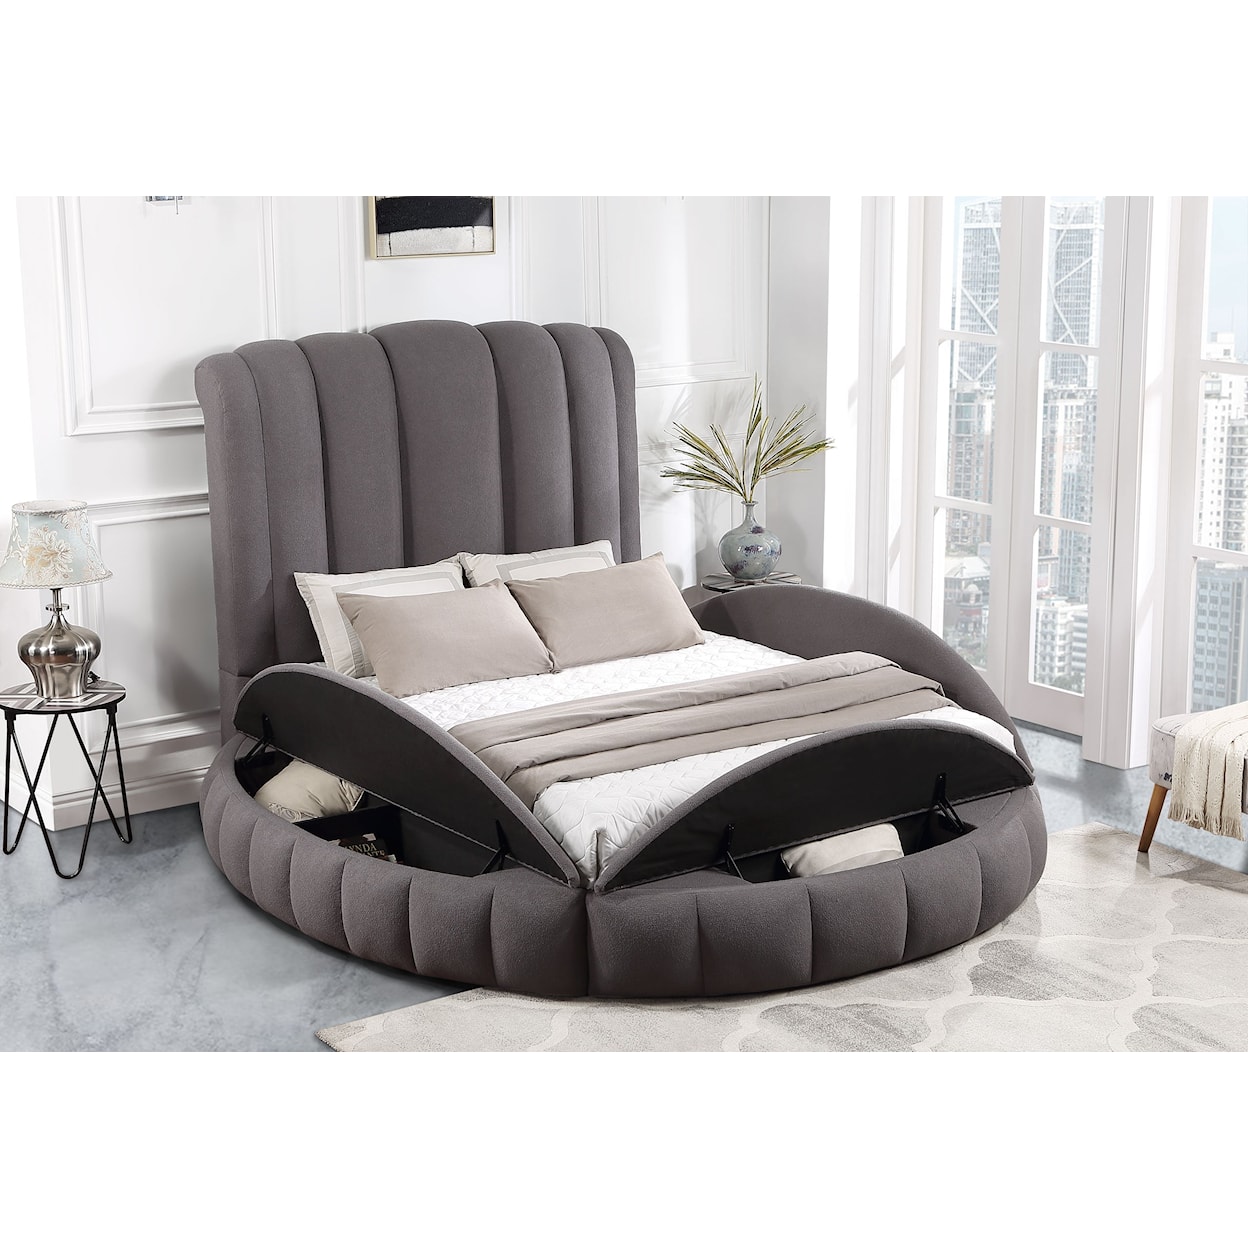 Global Furniture Snow Queen Bed